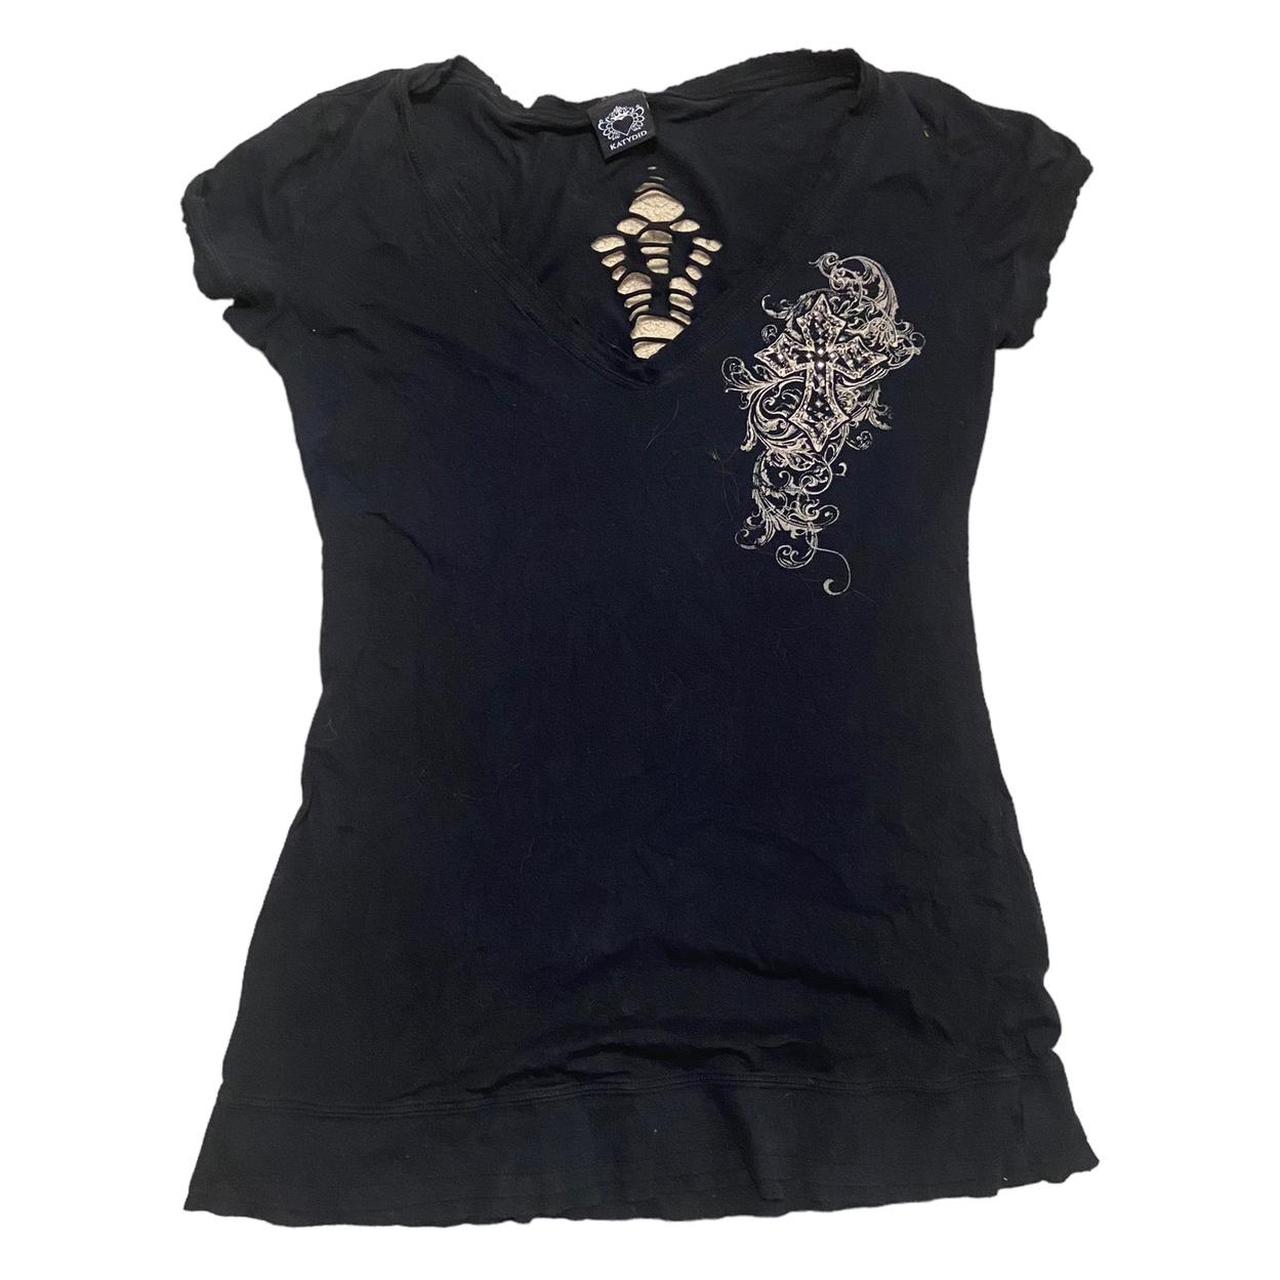 Katydid mcbling cross shirt Size XL - Depop